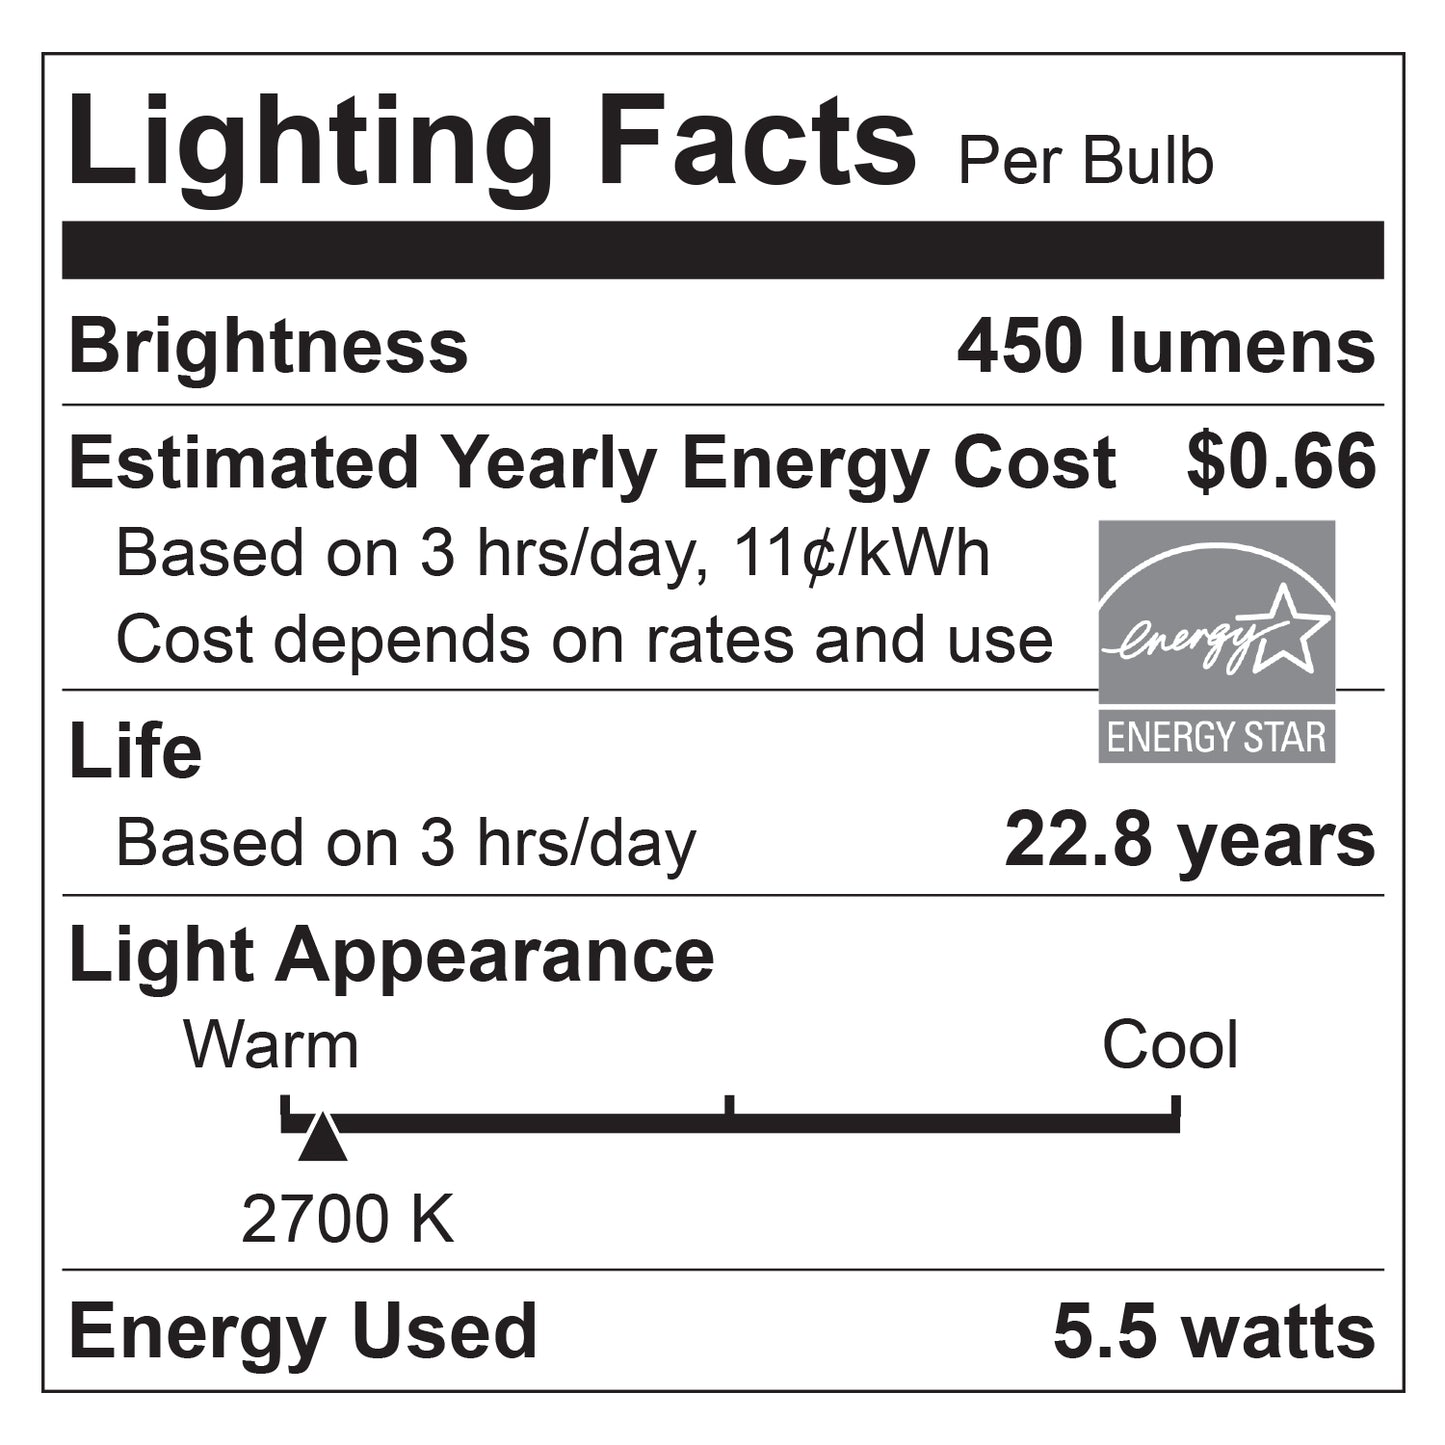 Sunlite 88347-SU LED A19 Standard Light Bulb, 5.5 Watts (40 Watt Equivalent), 450 Lumens, Medium Base (E26), Dimmable, UL Listed, Energy Star, 2700K Warm White, Pack of 12